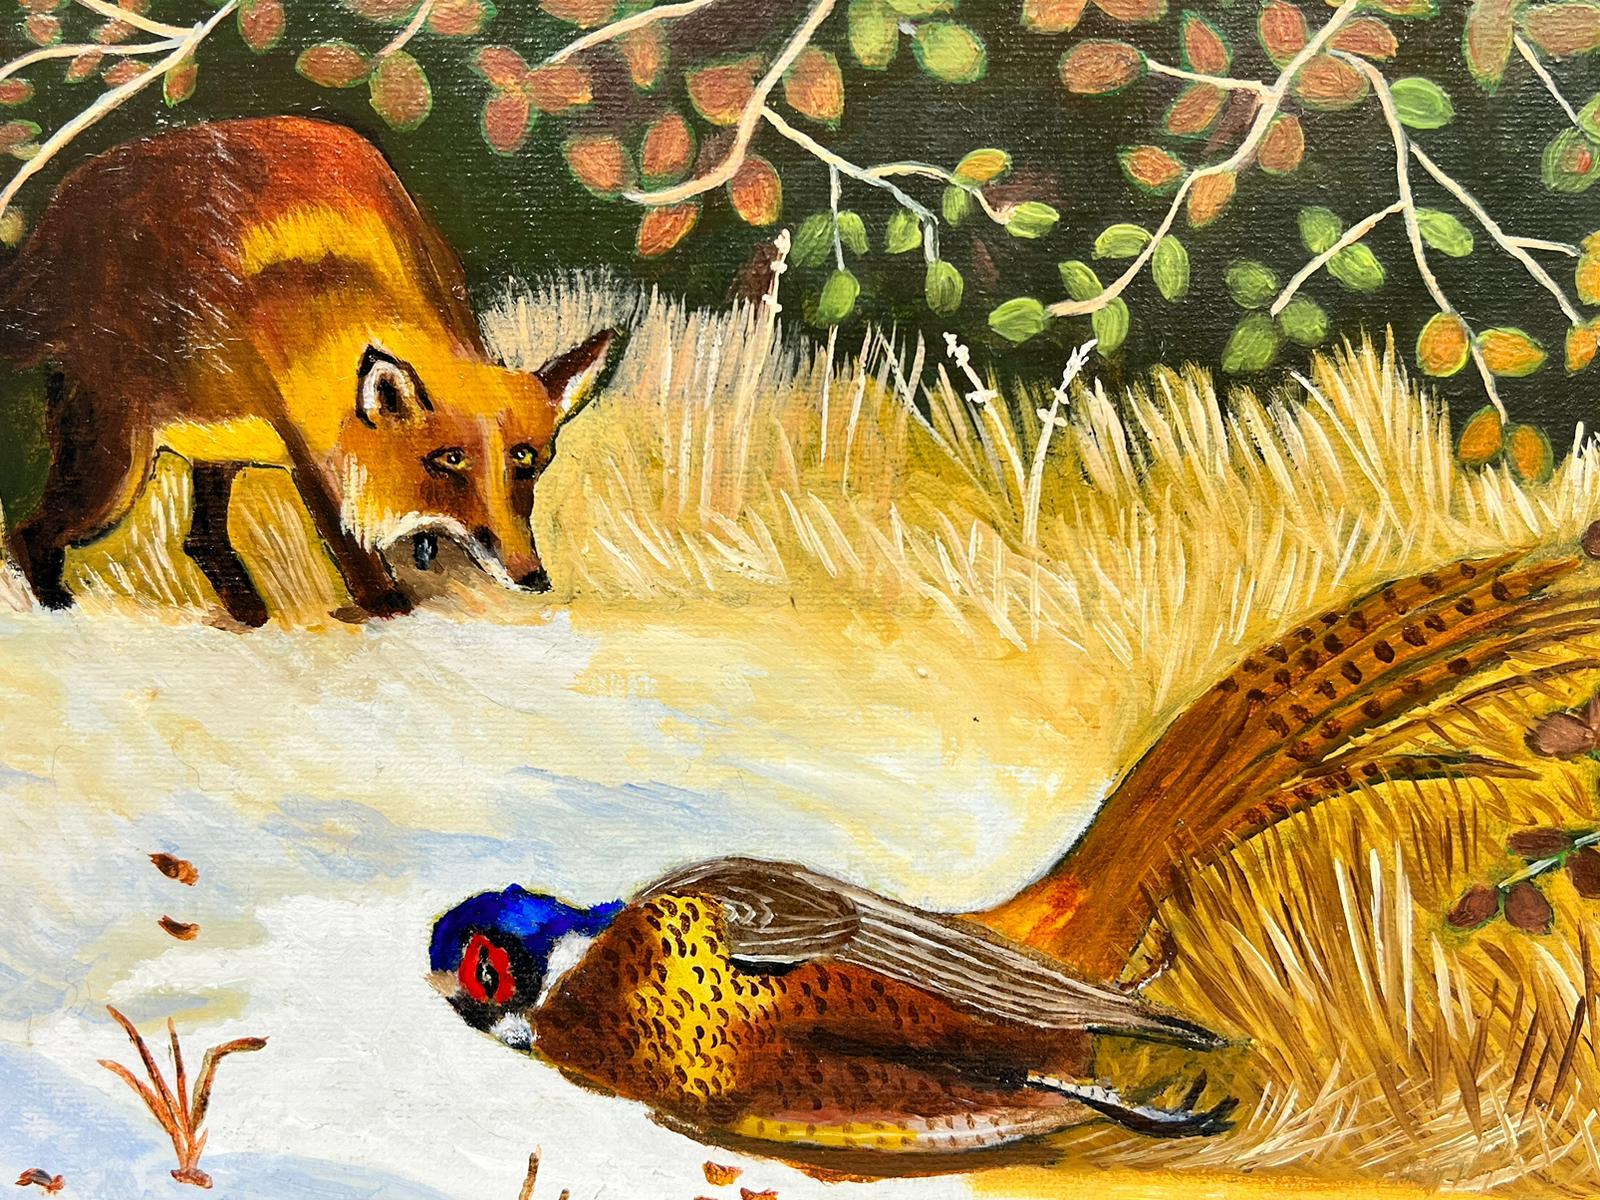 acrylic fox painting